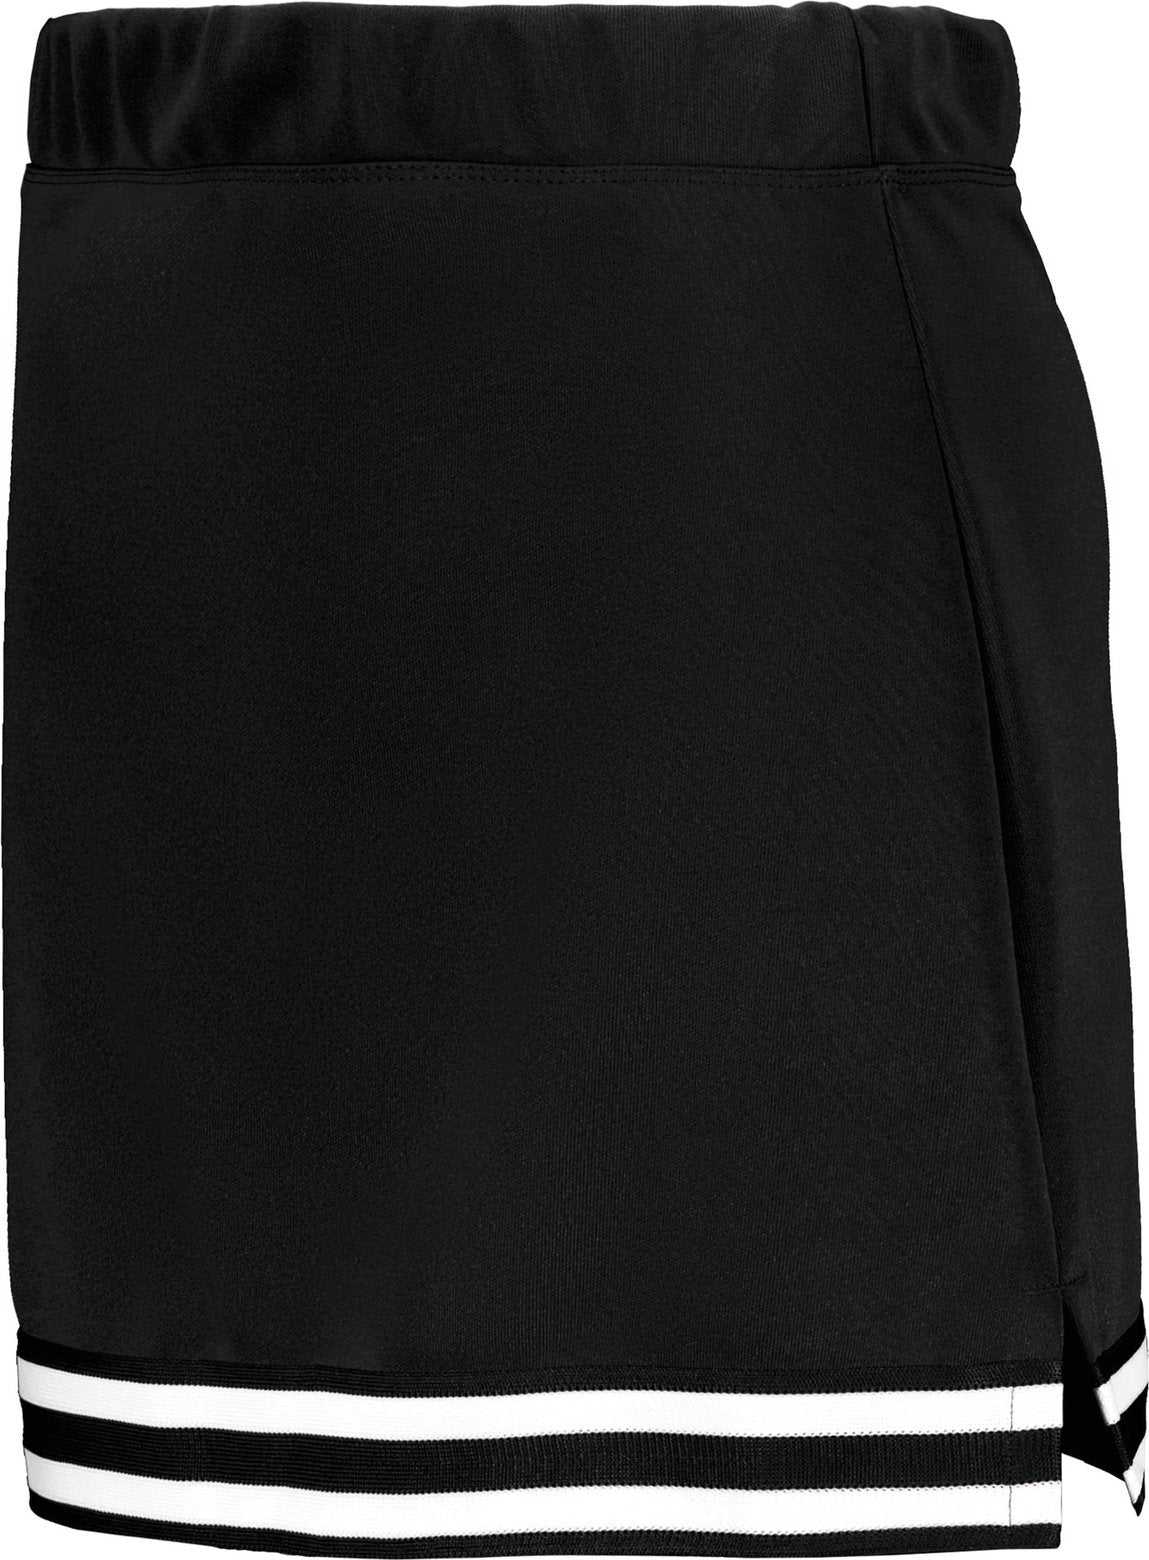 Augusta 6925 Ladies Cheer Squad Skirt - Black Black White - HIT a Double